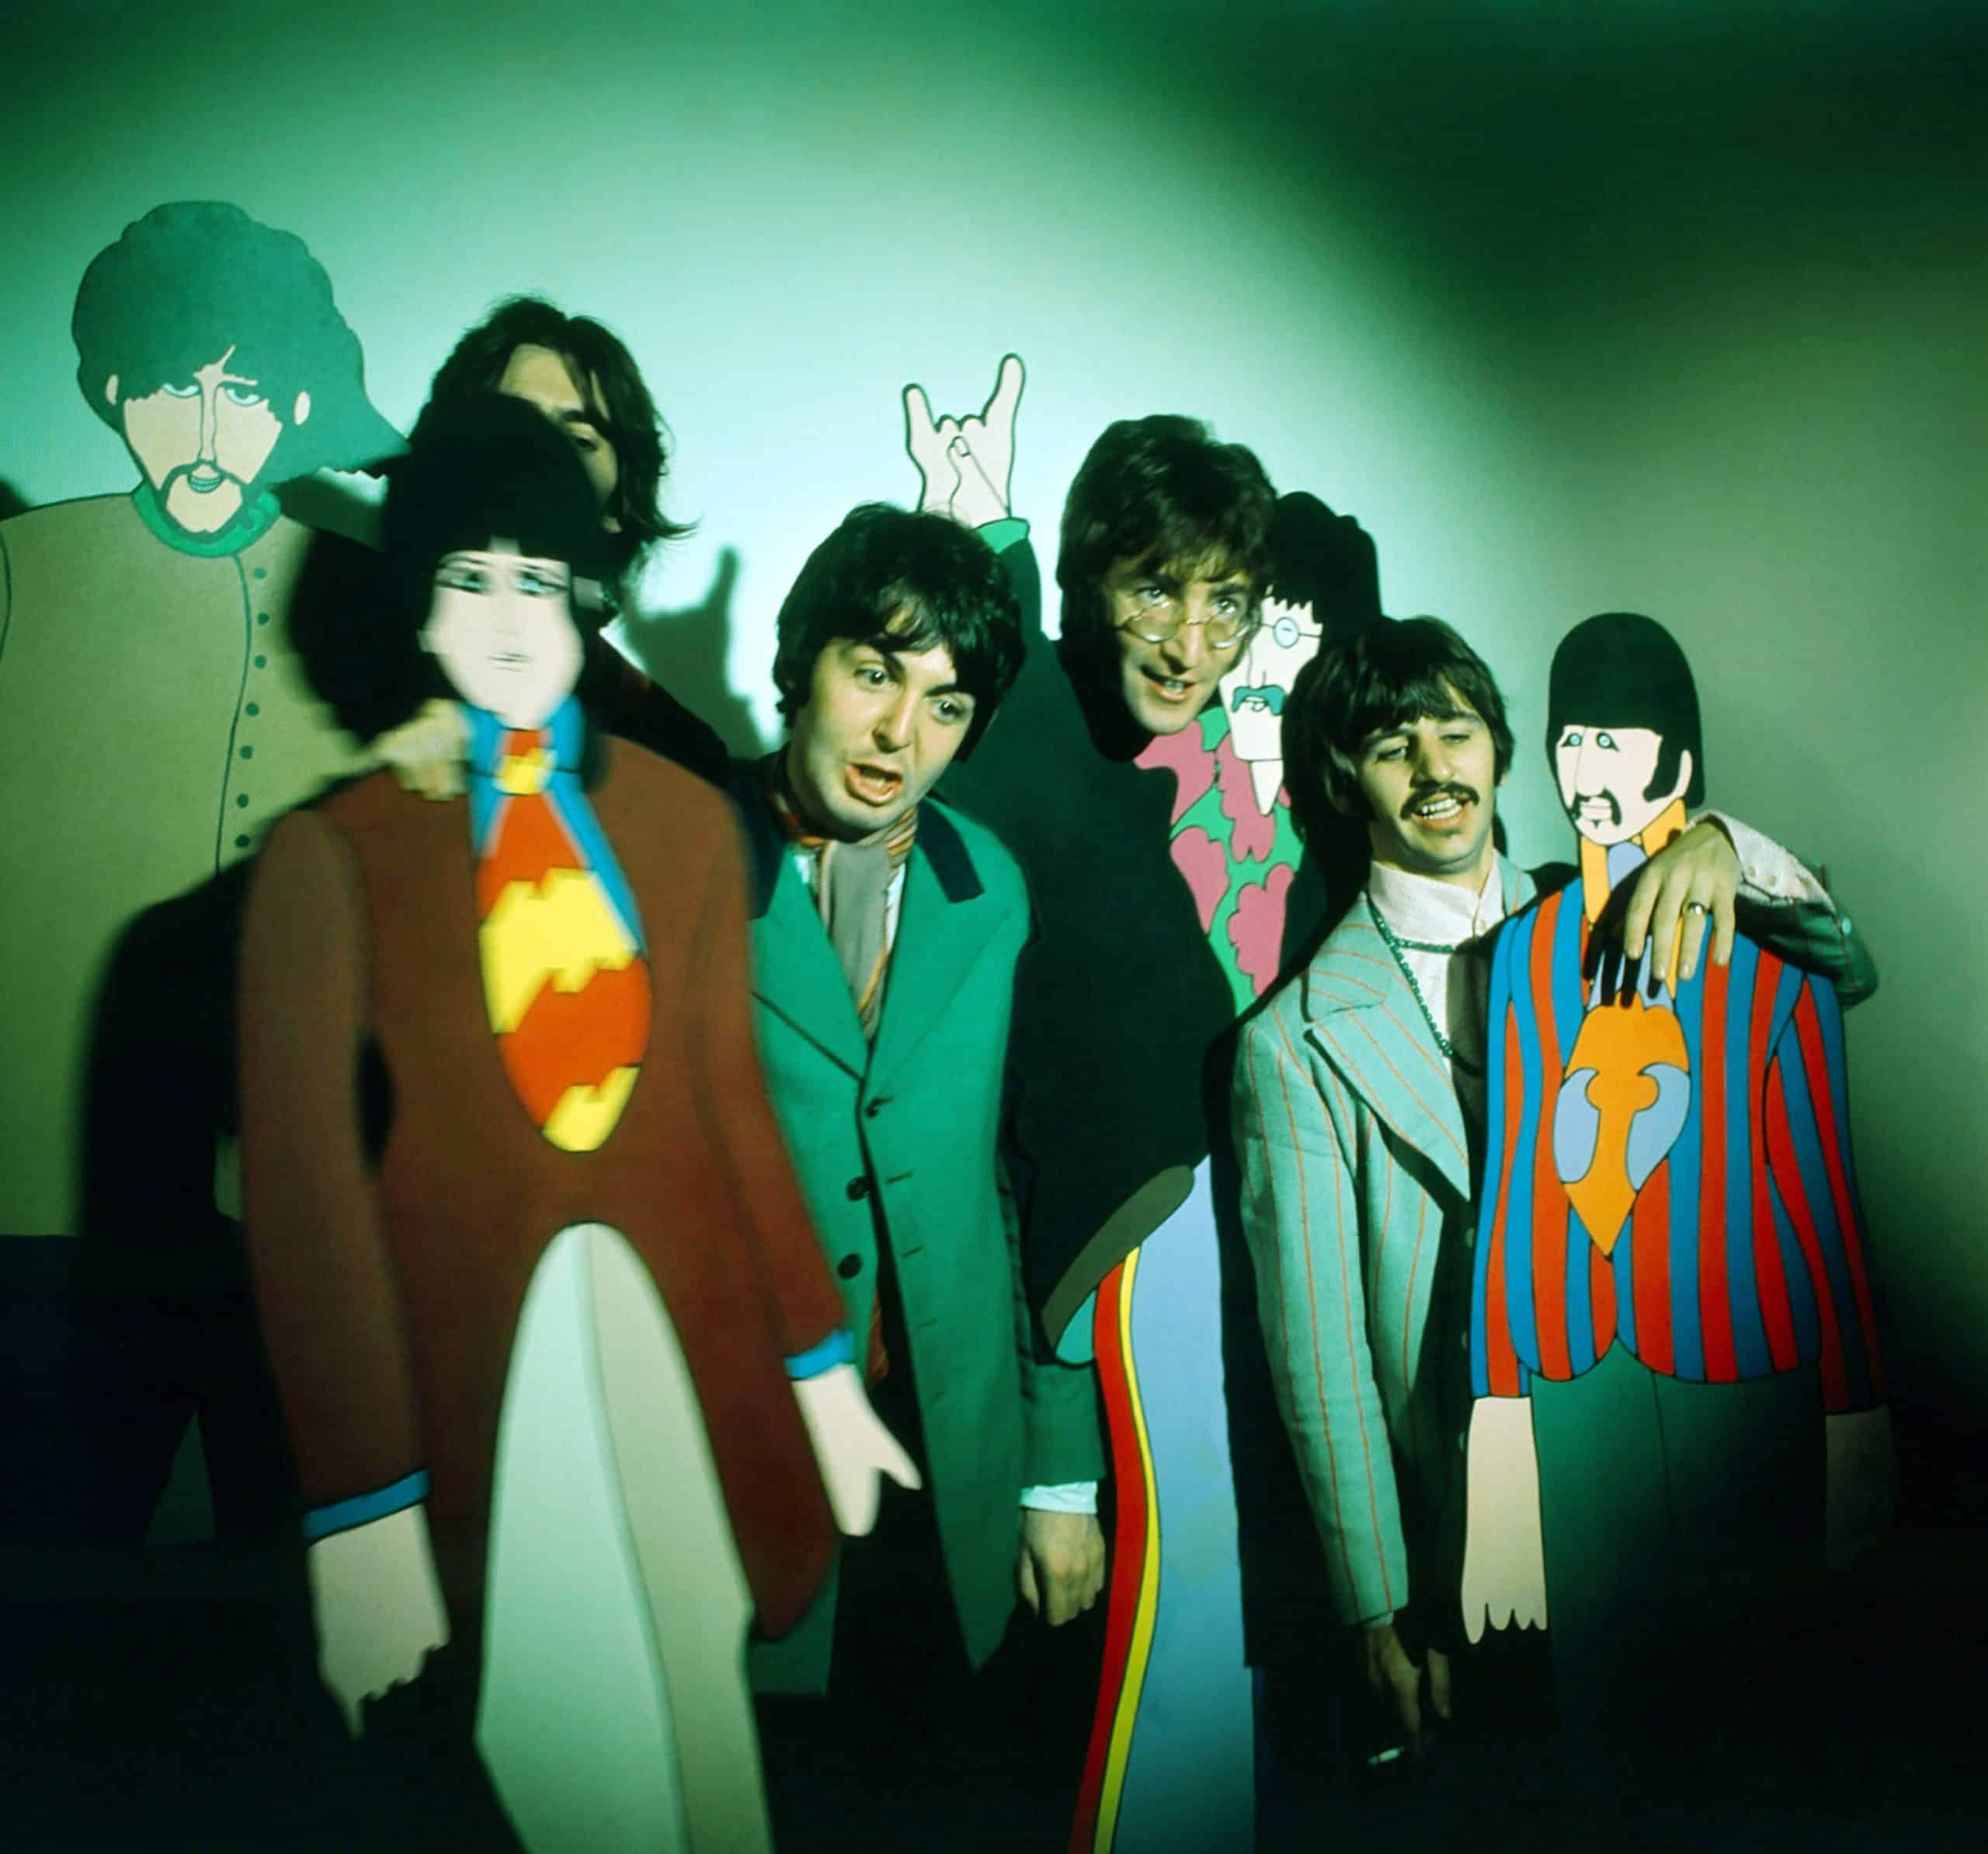 YELLOW SUBMARINE, from left: George Harrison (rear), Paul McCartney, John Lennon, Ringo Starr, 1968